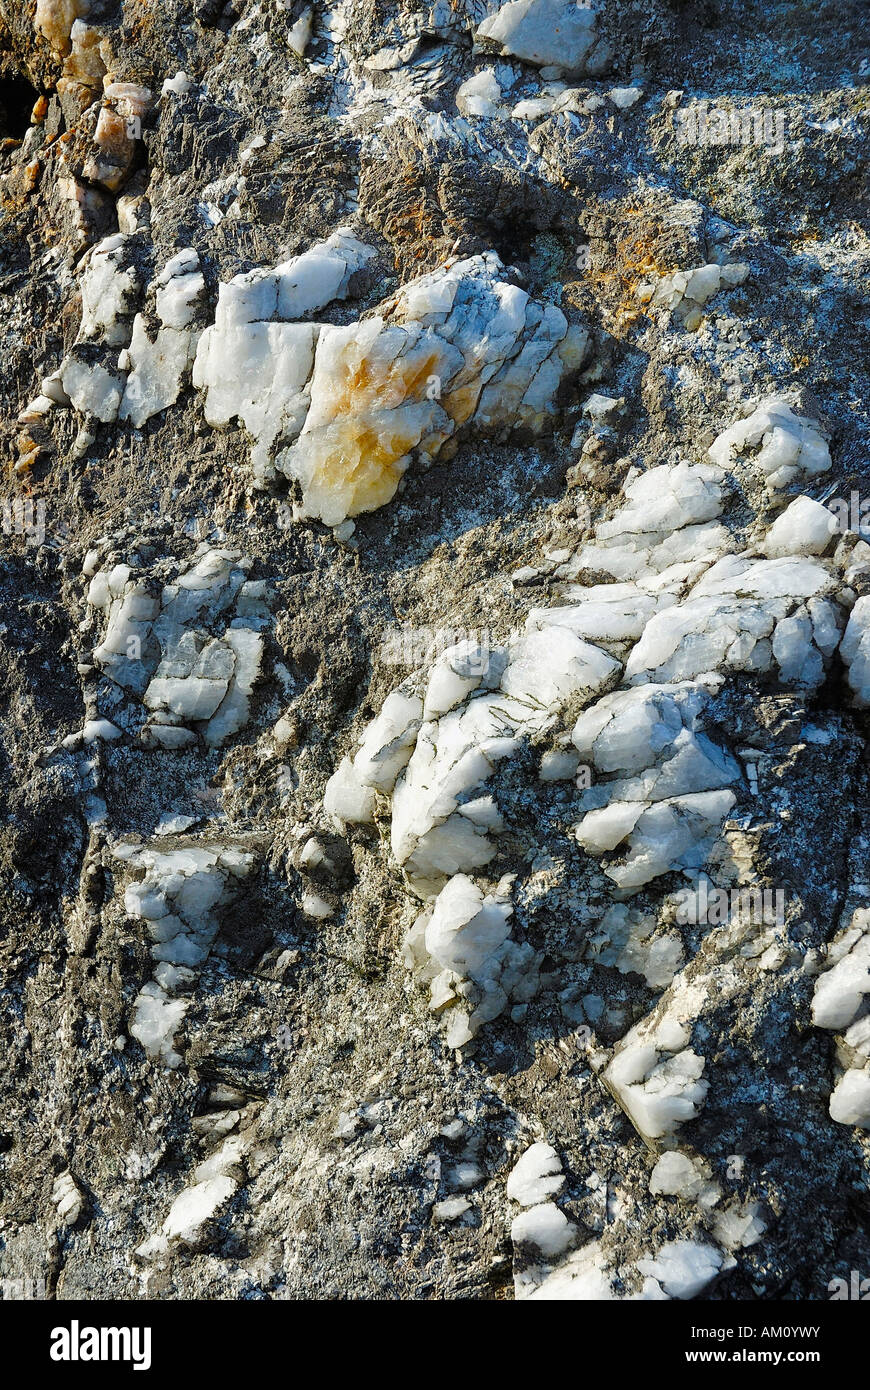 Eroded cristalline quartz vein containing metallic oxides on granite rock, Glebdalough Ireland Stock Photo